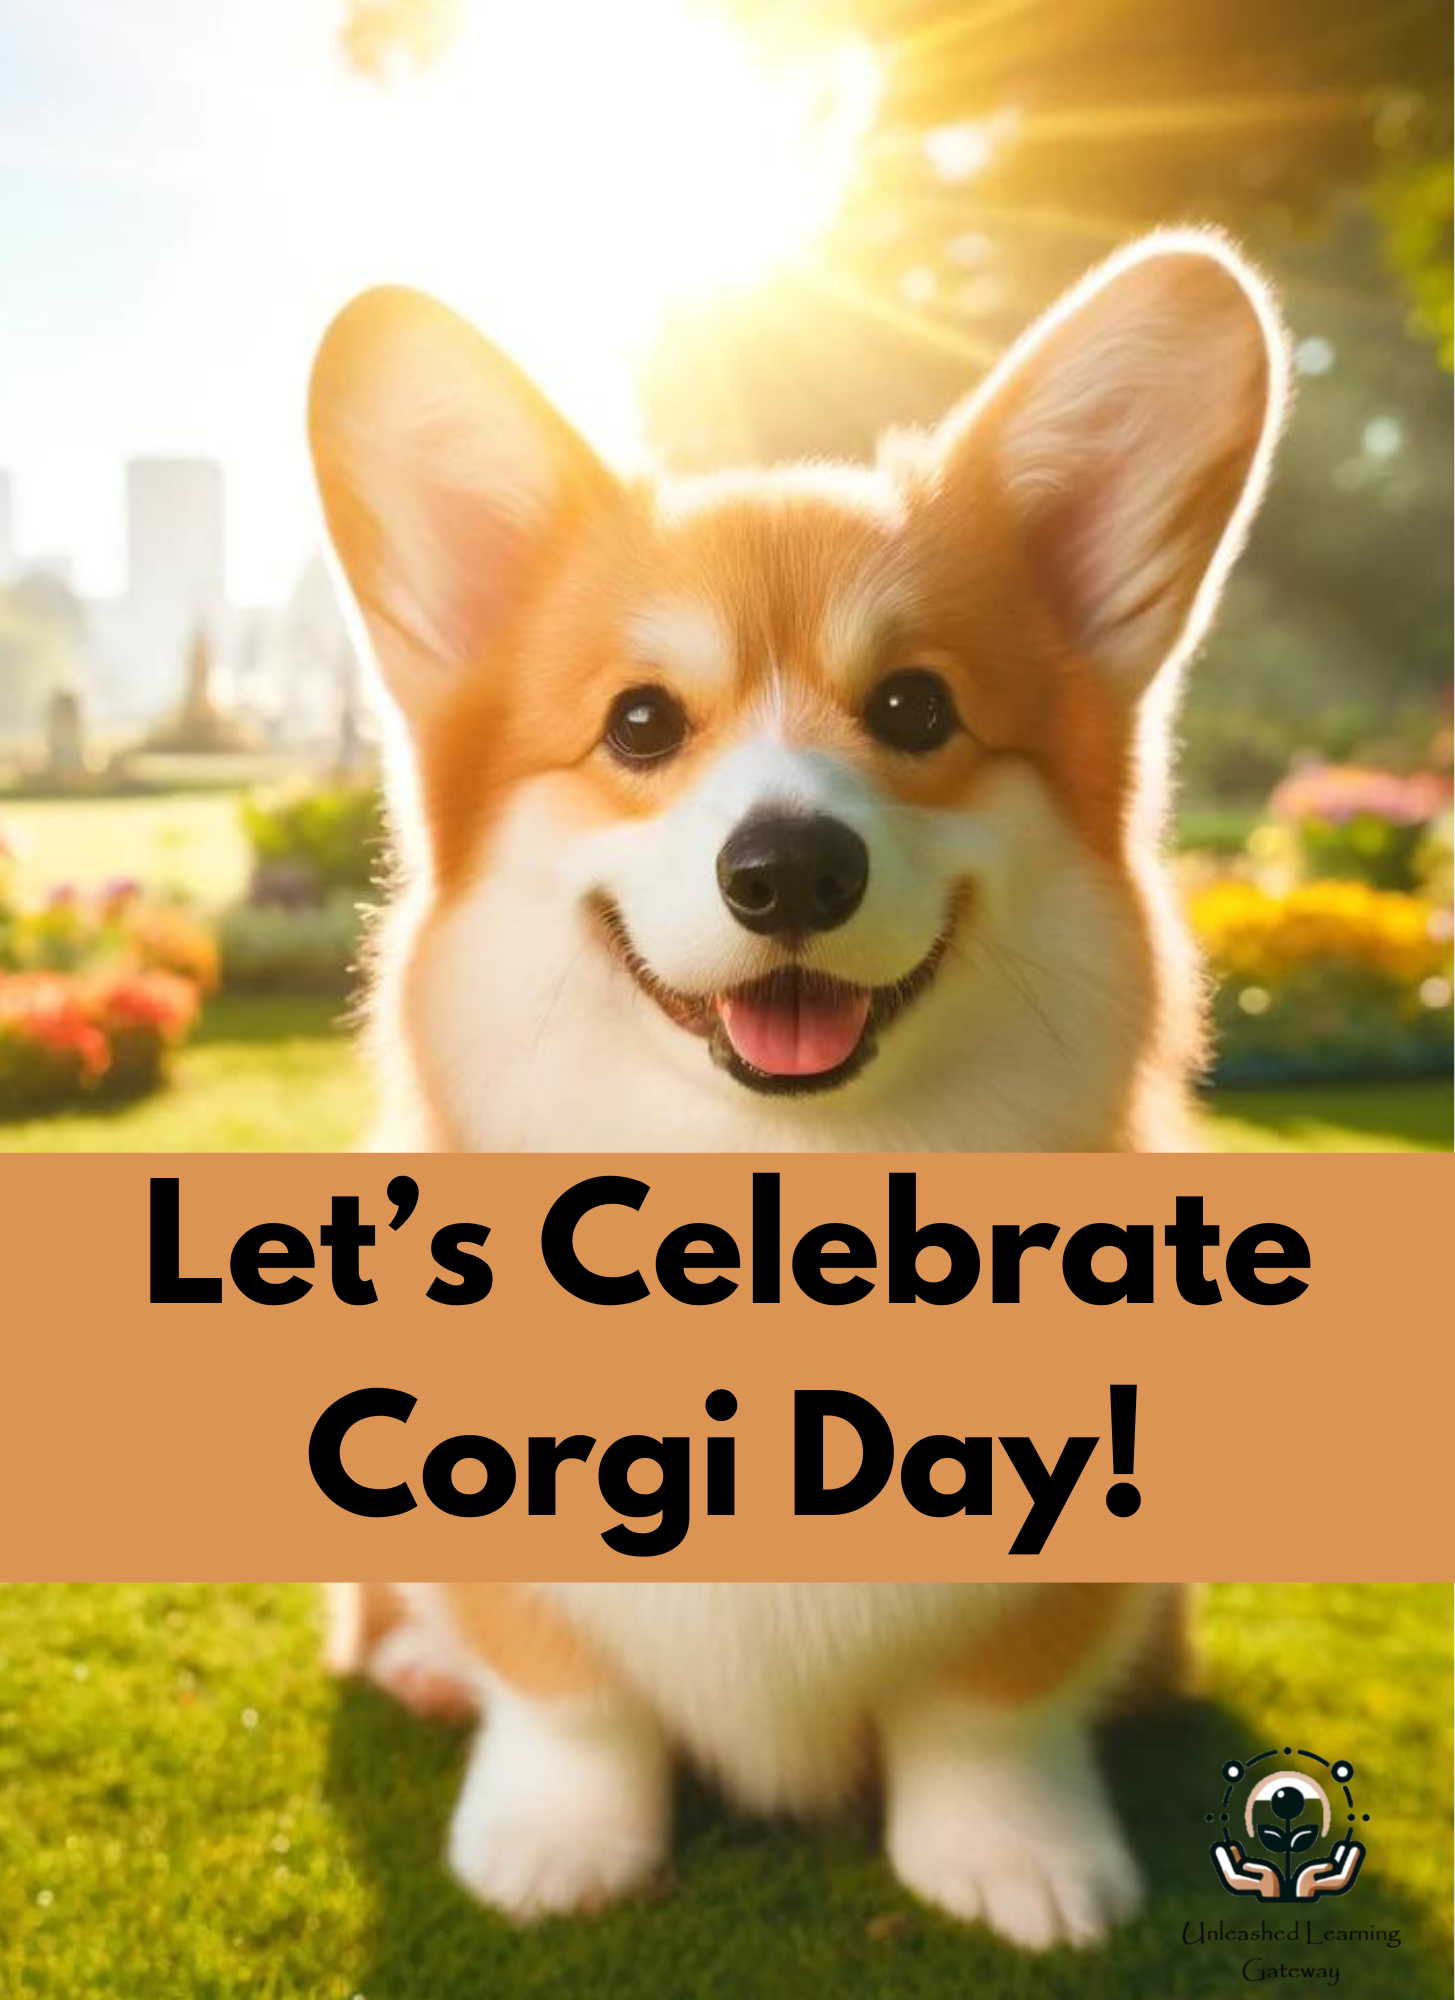 All About Corgi Dogs